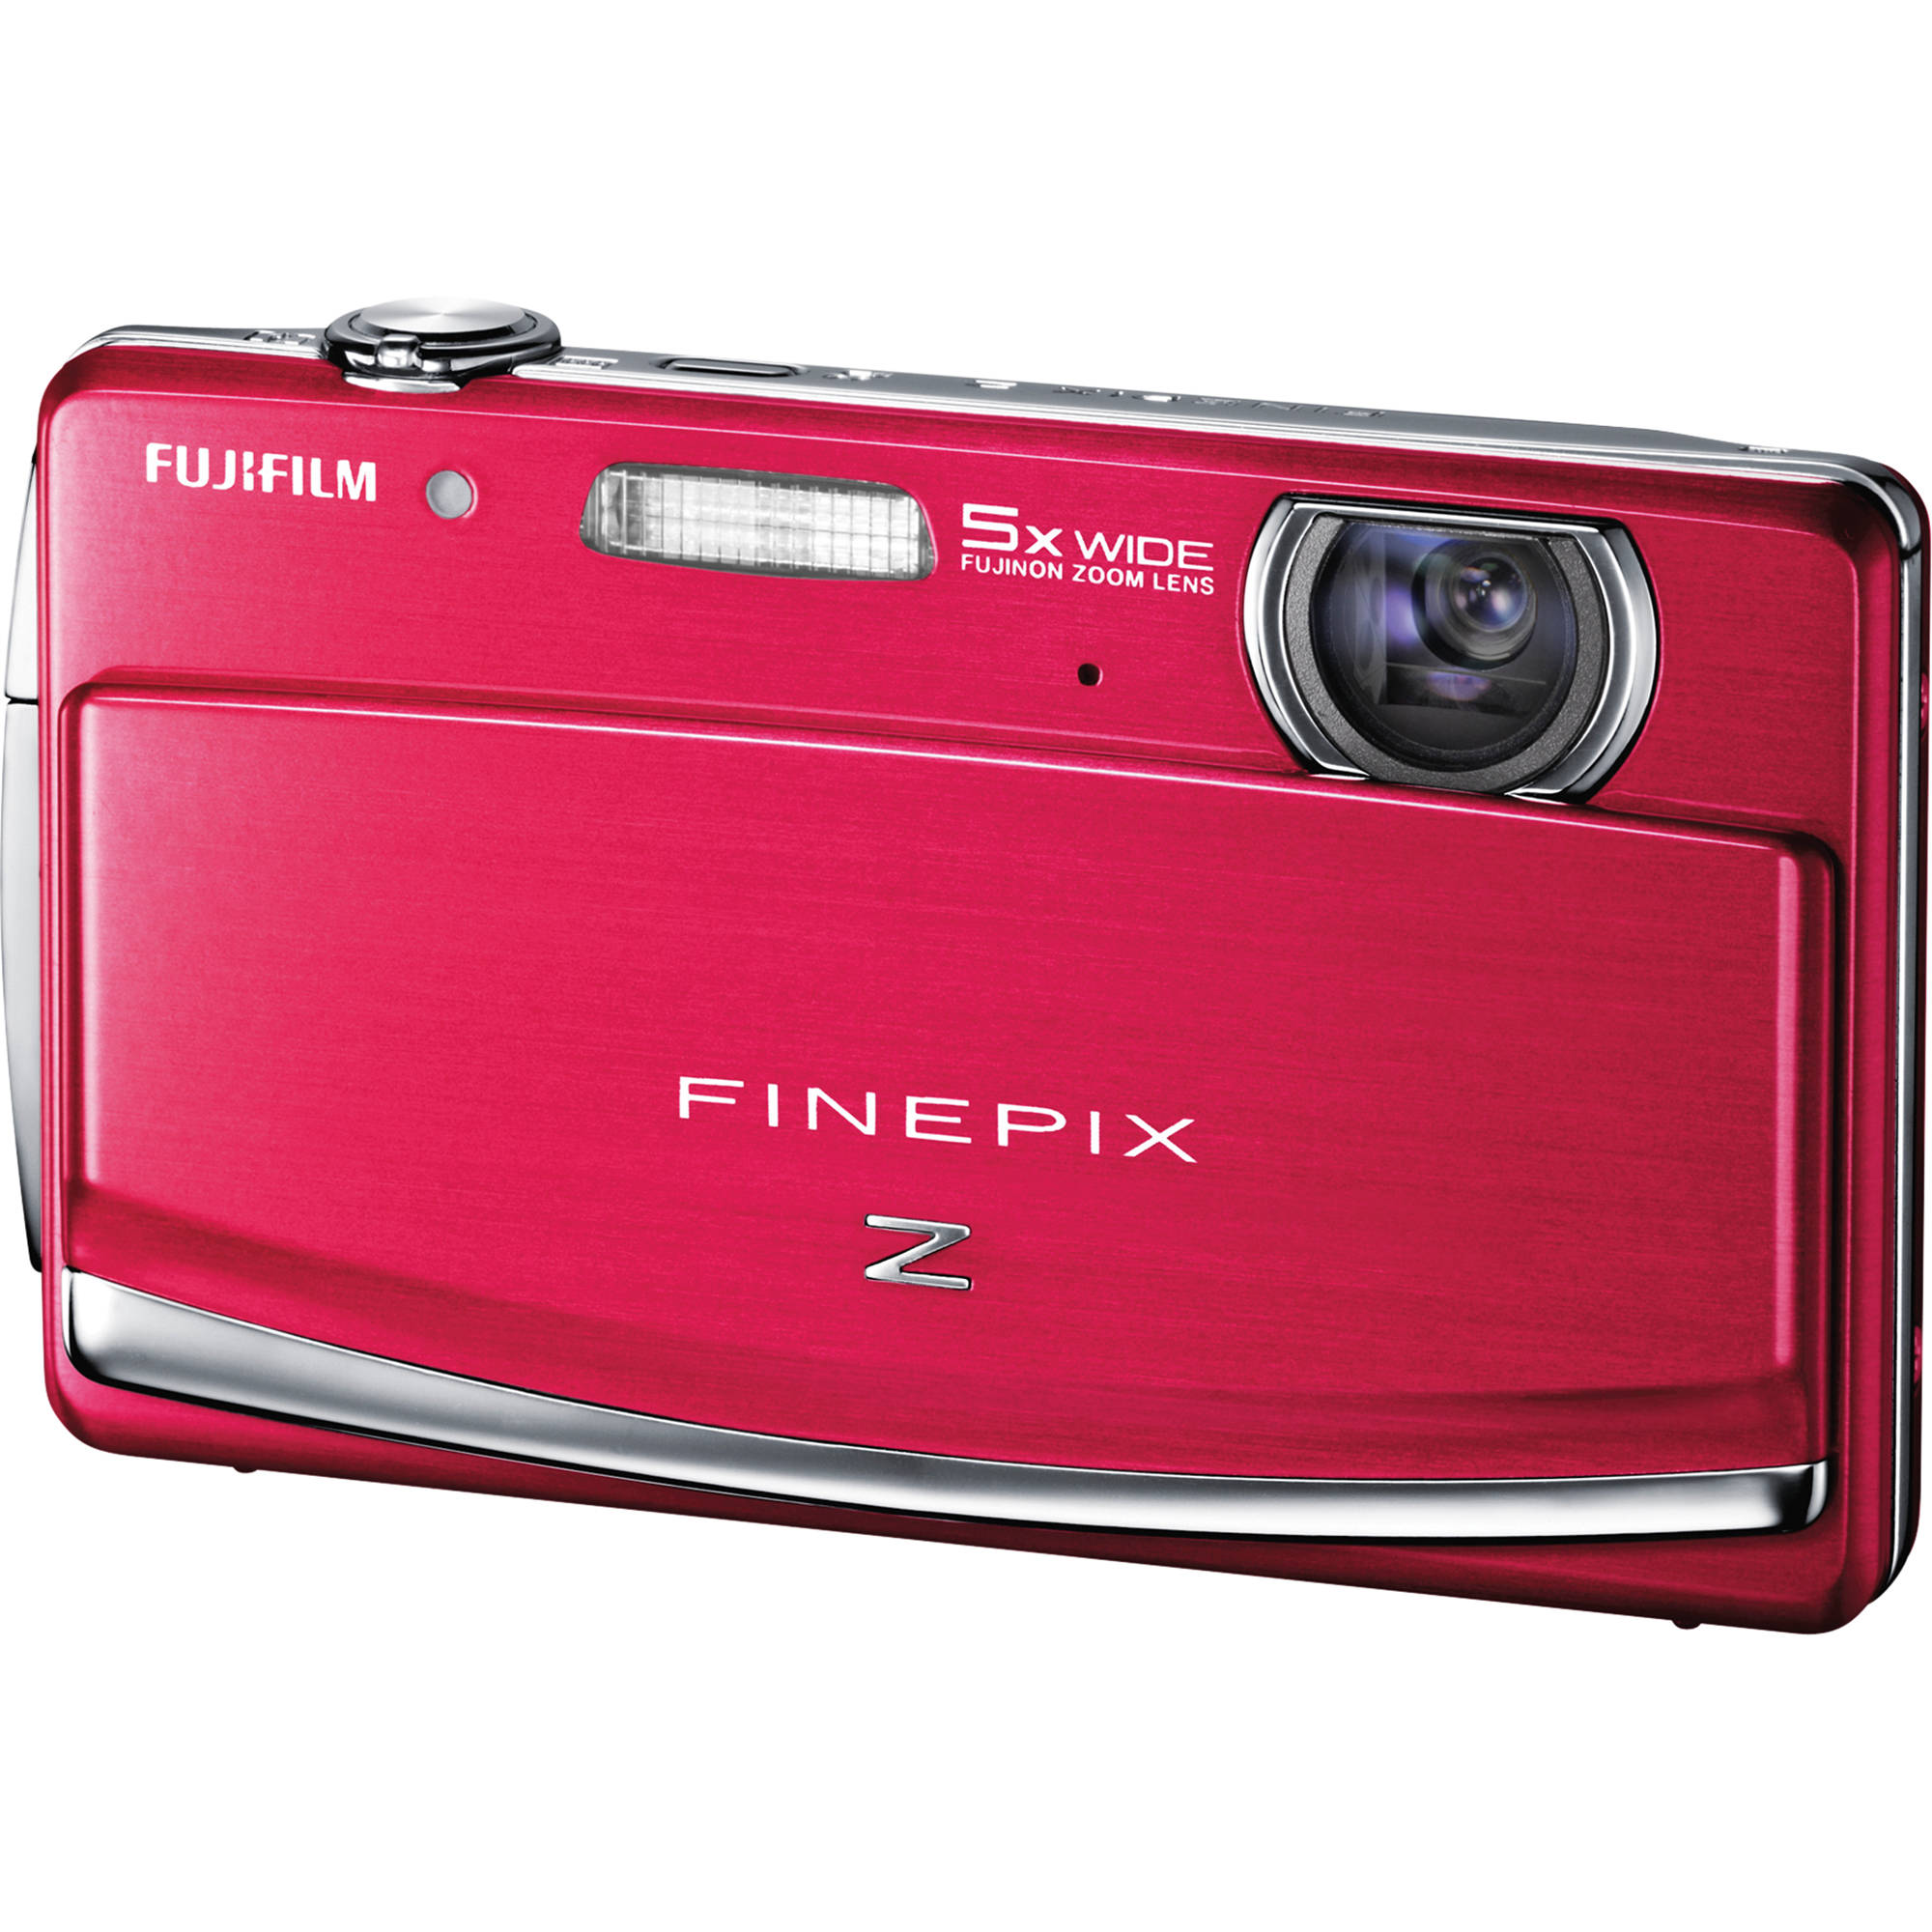 Fujifilm finepix s2950 user manual pdf download